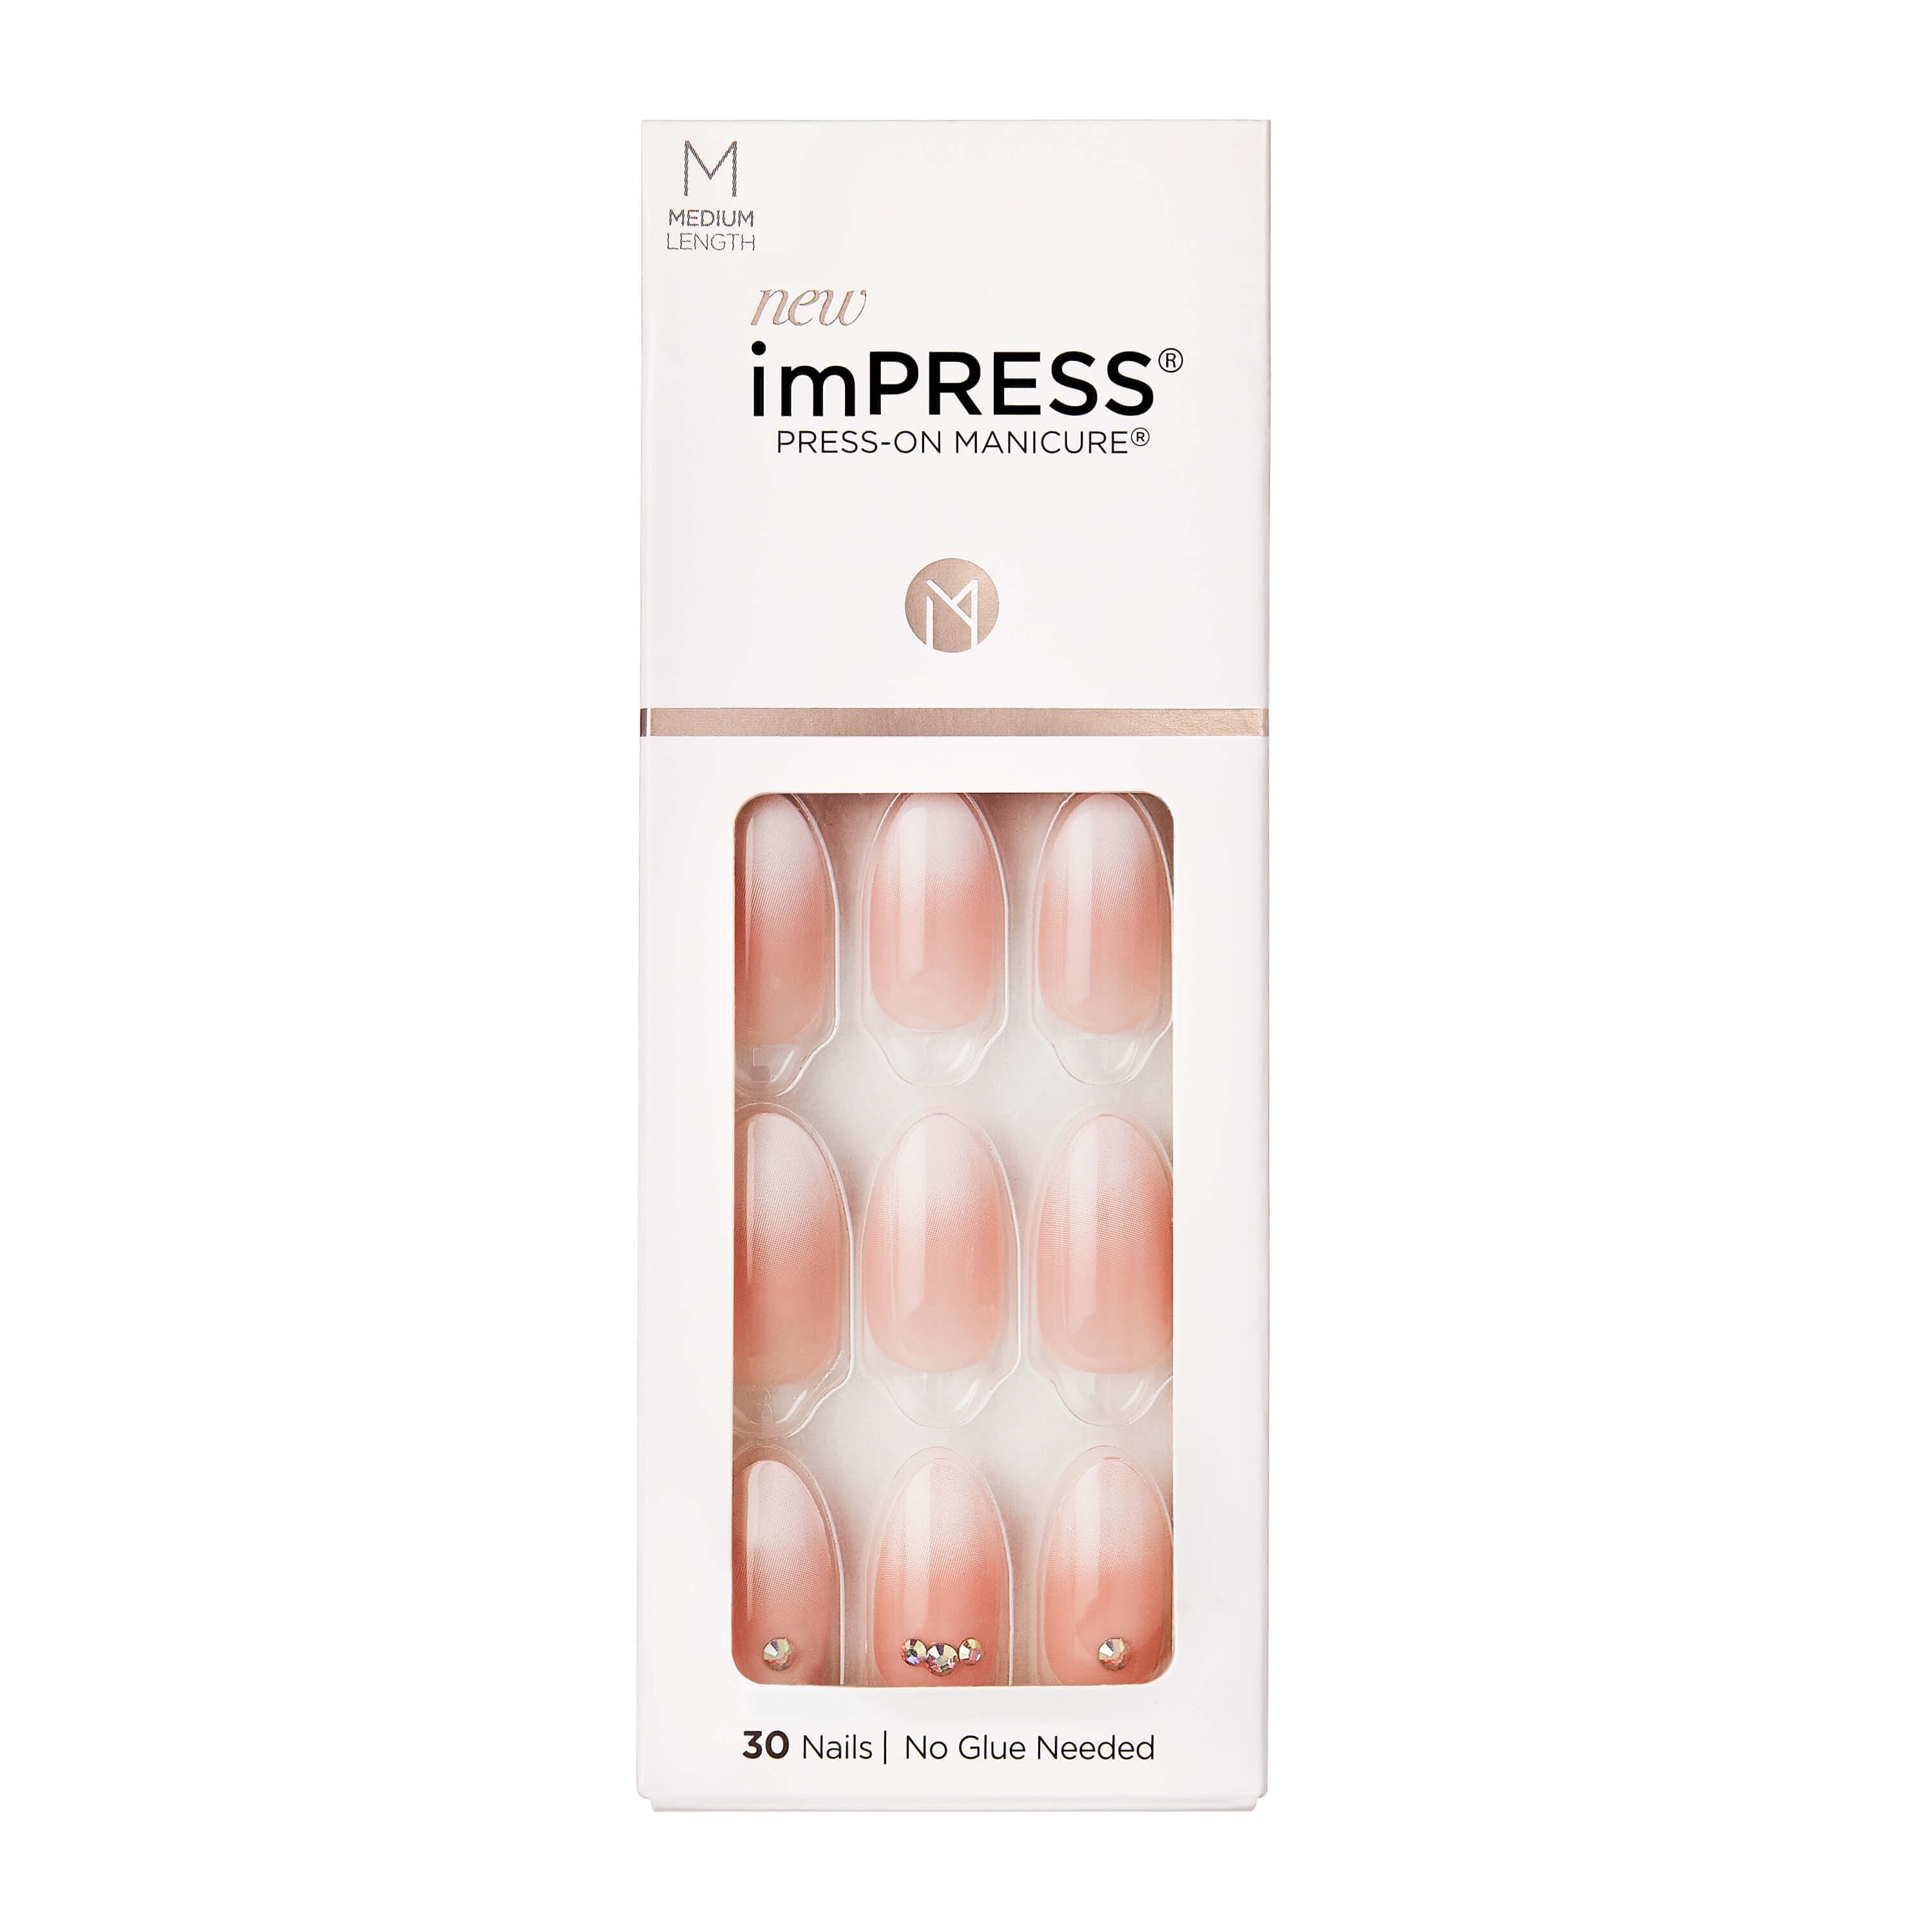 imPRESS Press-on Manicure - Awestruck, Medium 